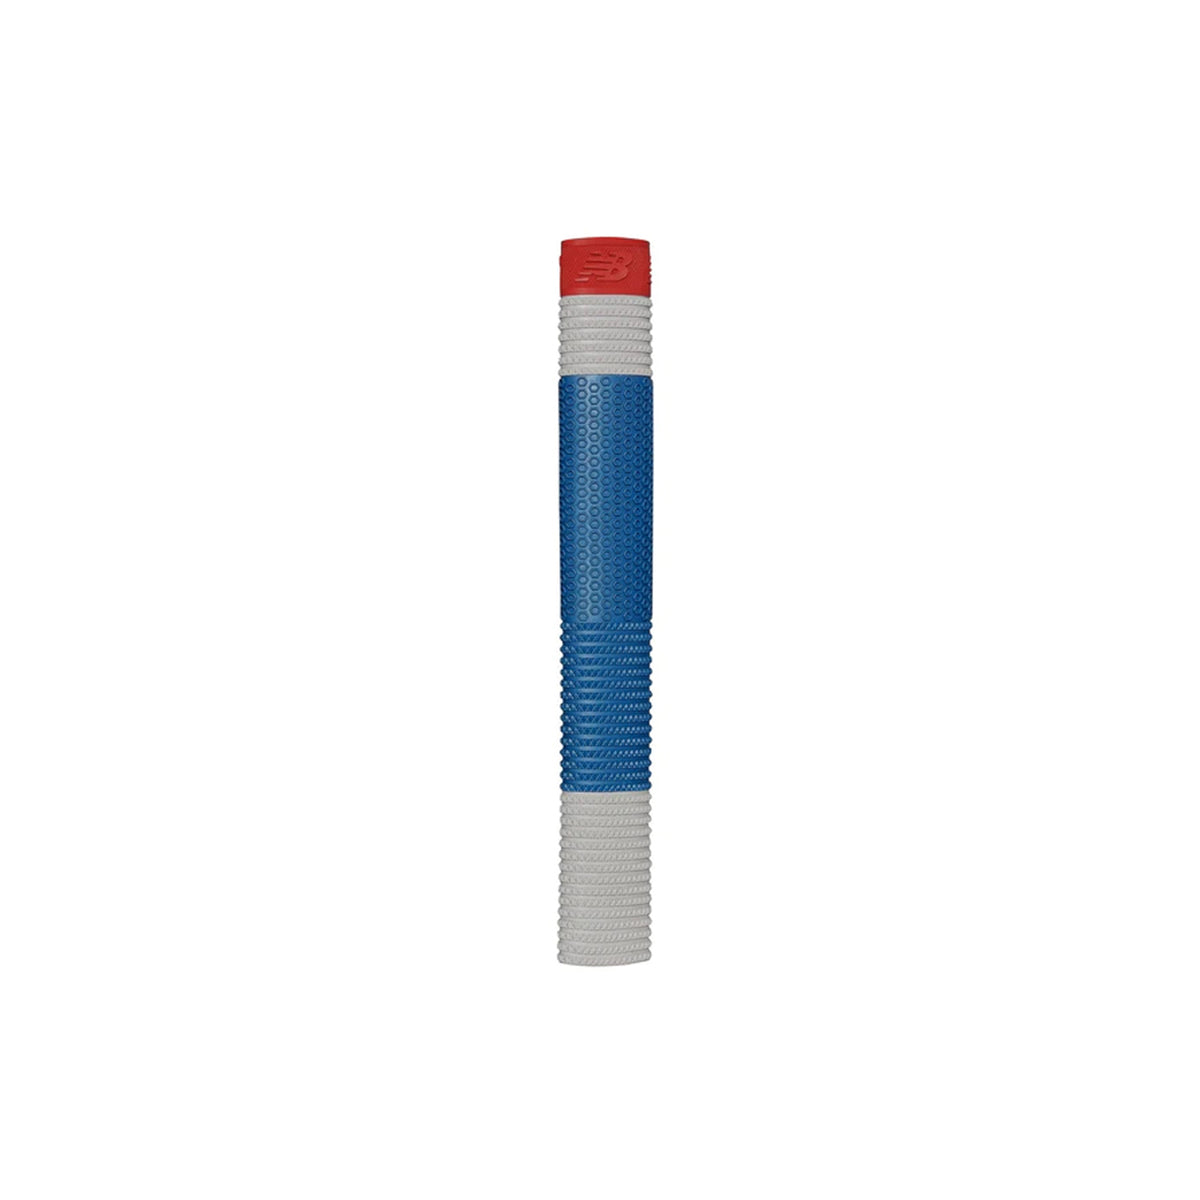 New Balance TC Cricket Bat Grip: Red/White/Blue/White